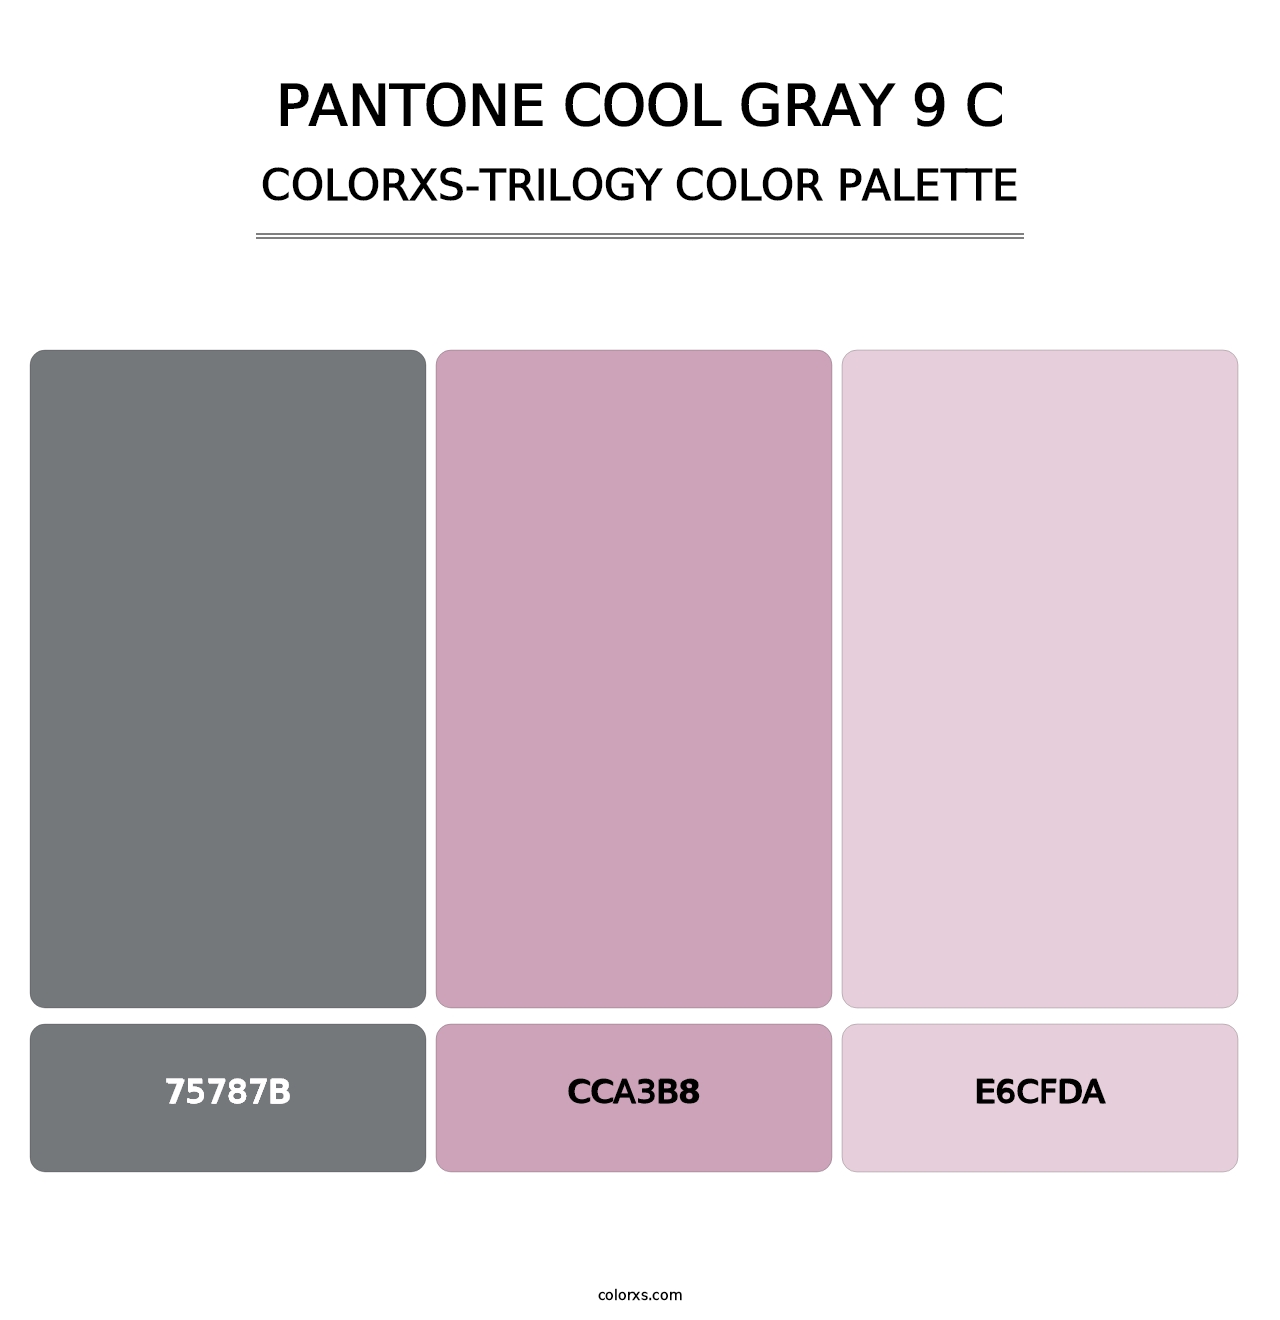 PANTONE Cool Gray 9 C - Colorxs Trilogy Palette